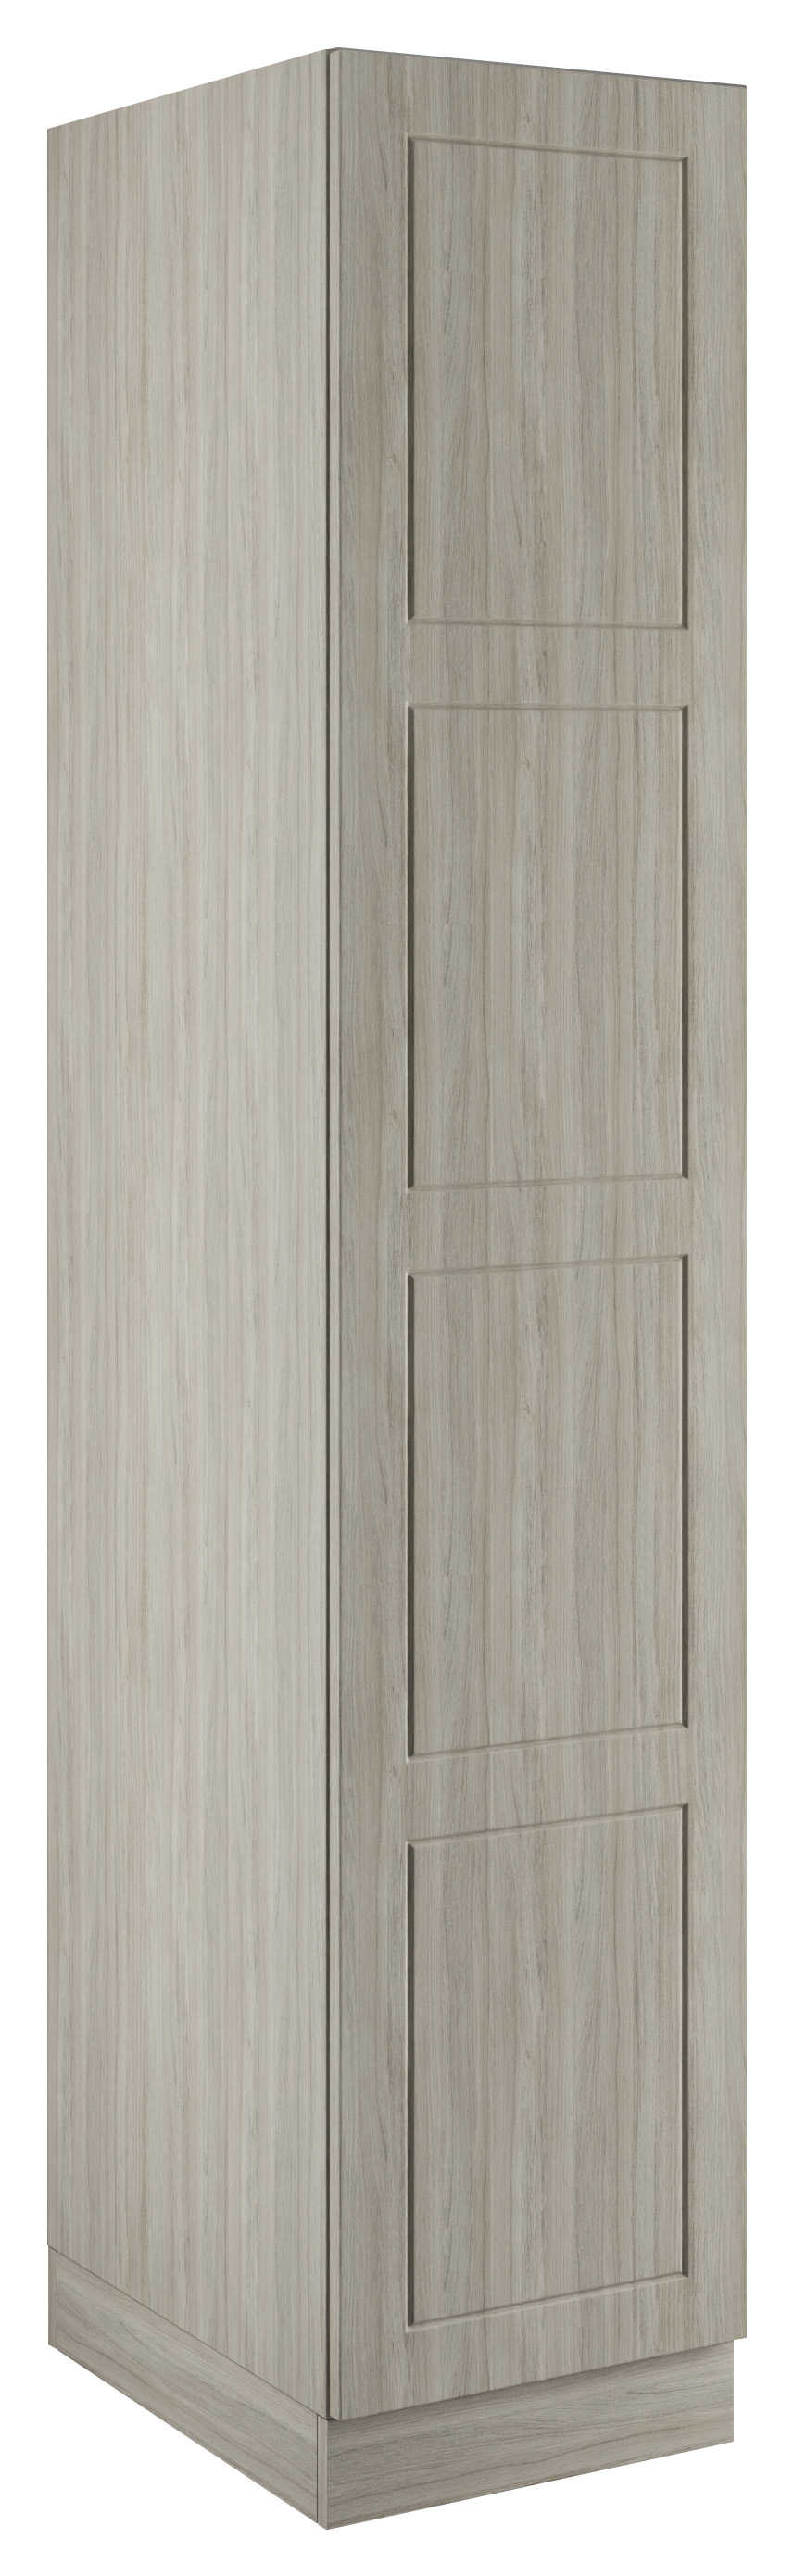 Bramham Urban Oak Single Wardrobe with Single Rail - 450 x 2260 x 608mm